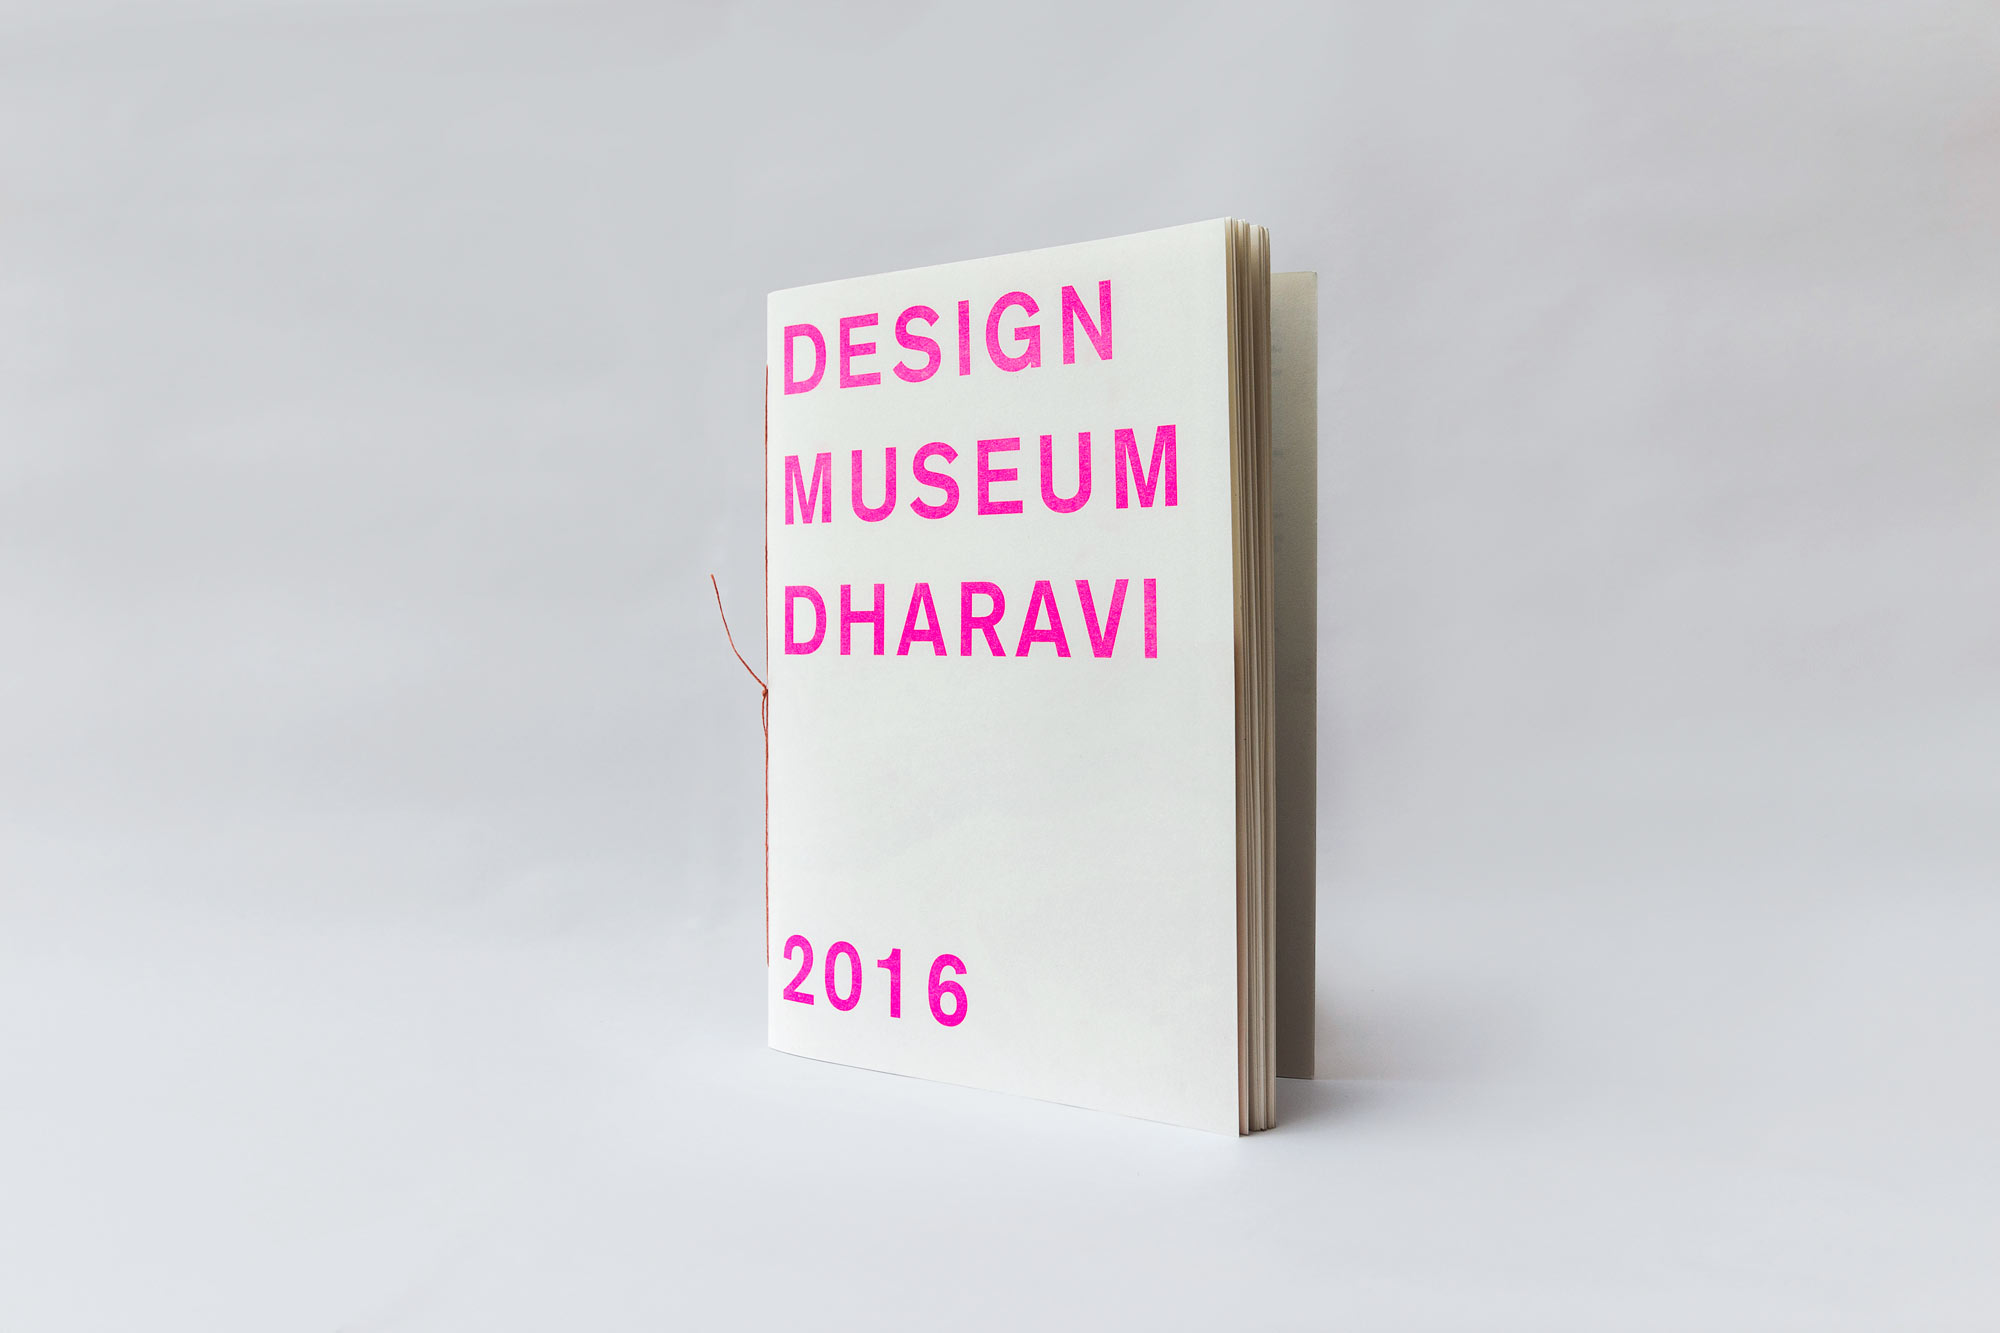 Courtesy of Design Museum Dharavi